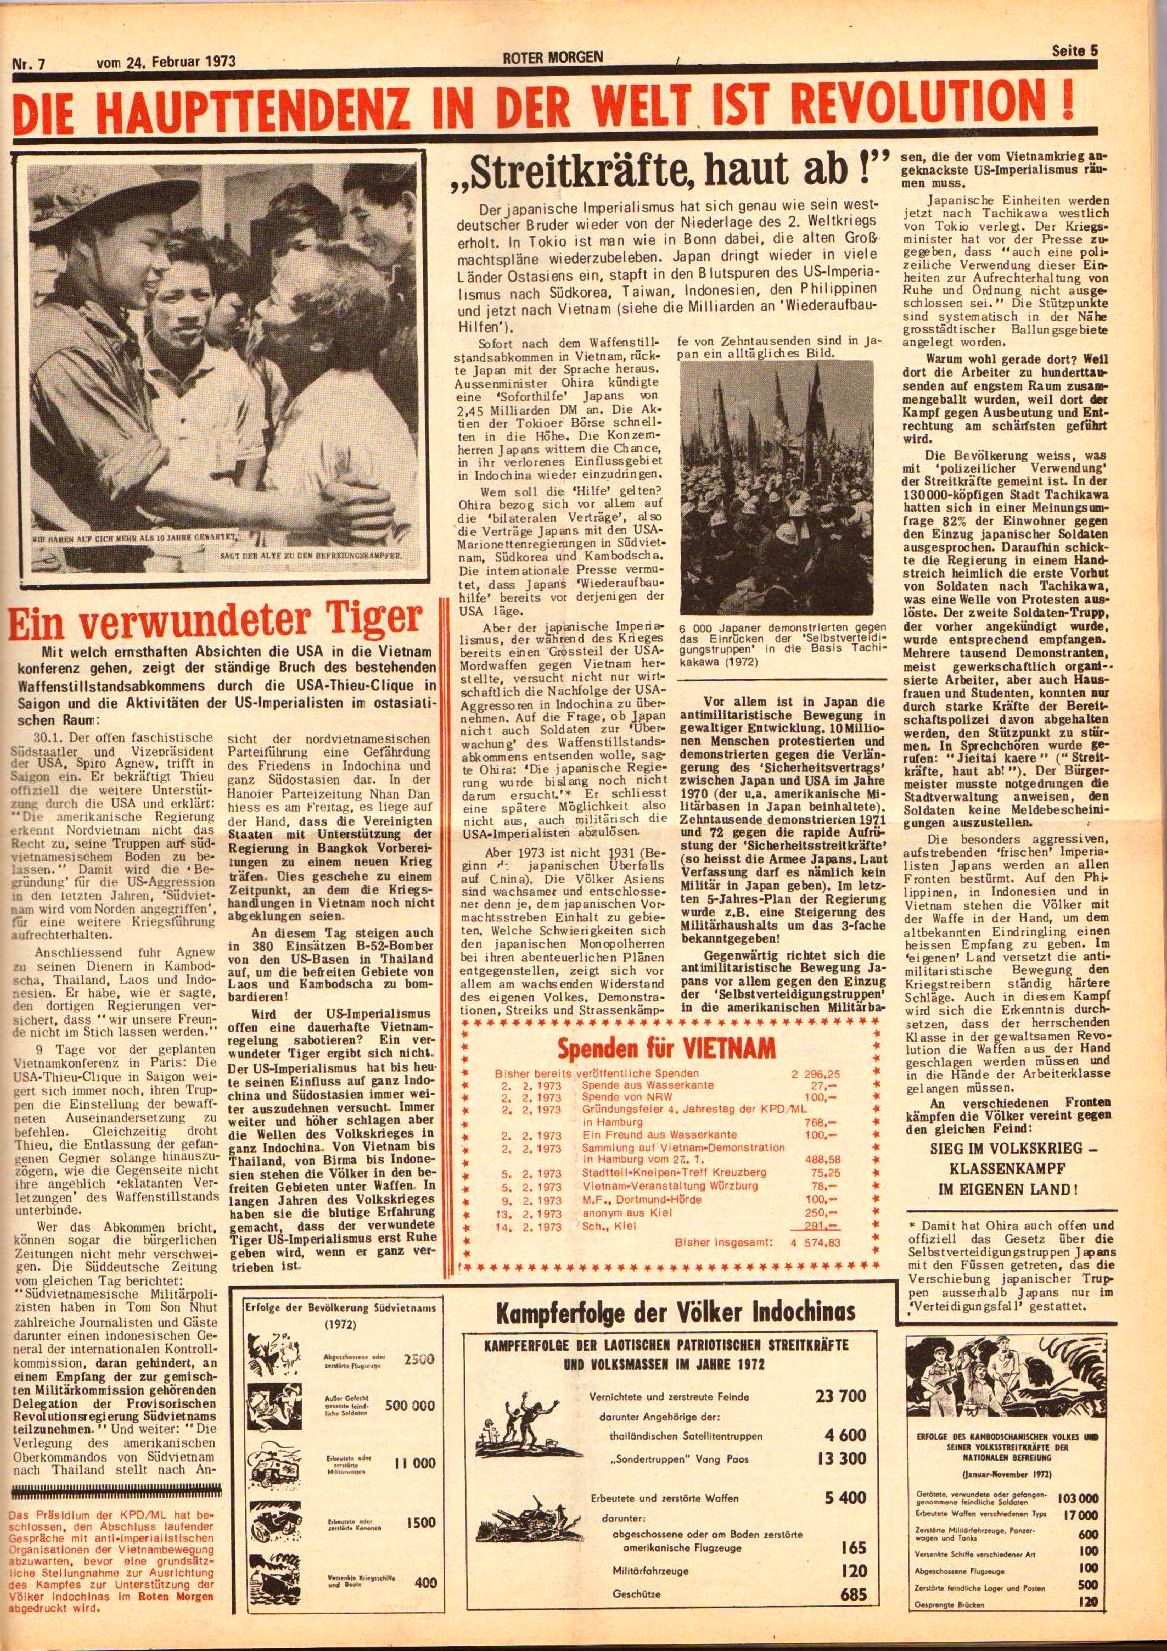 Roter Morgen, 7. Jg., 24. Februar 1973, Nr. 7, Seite 5